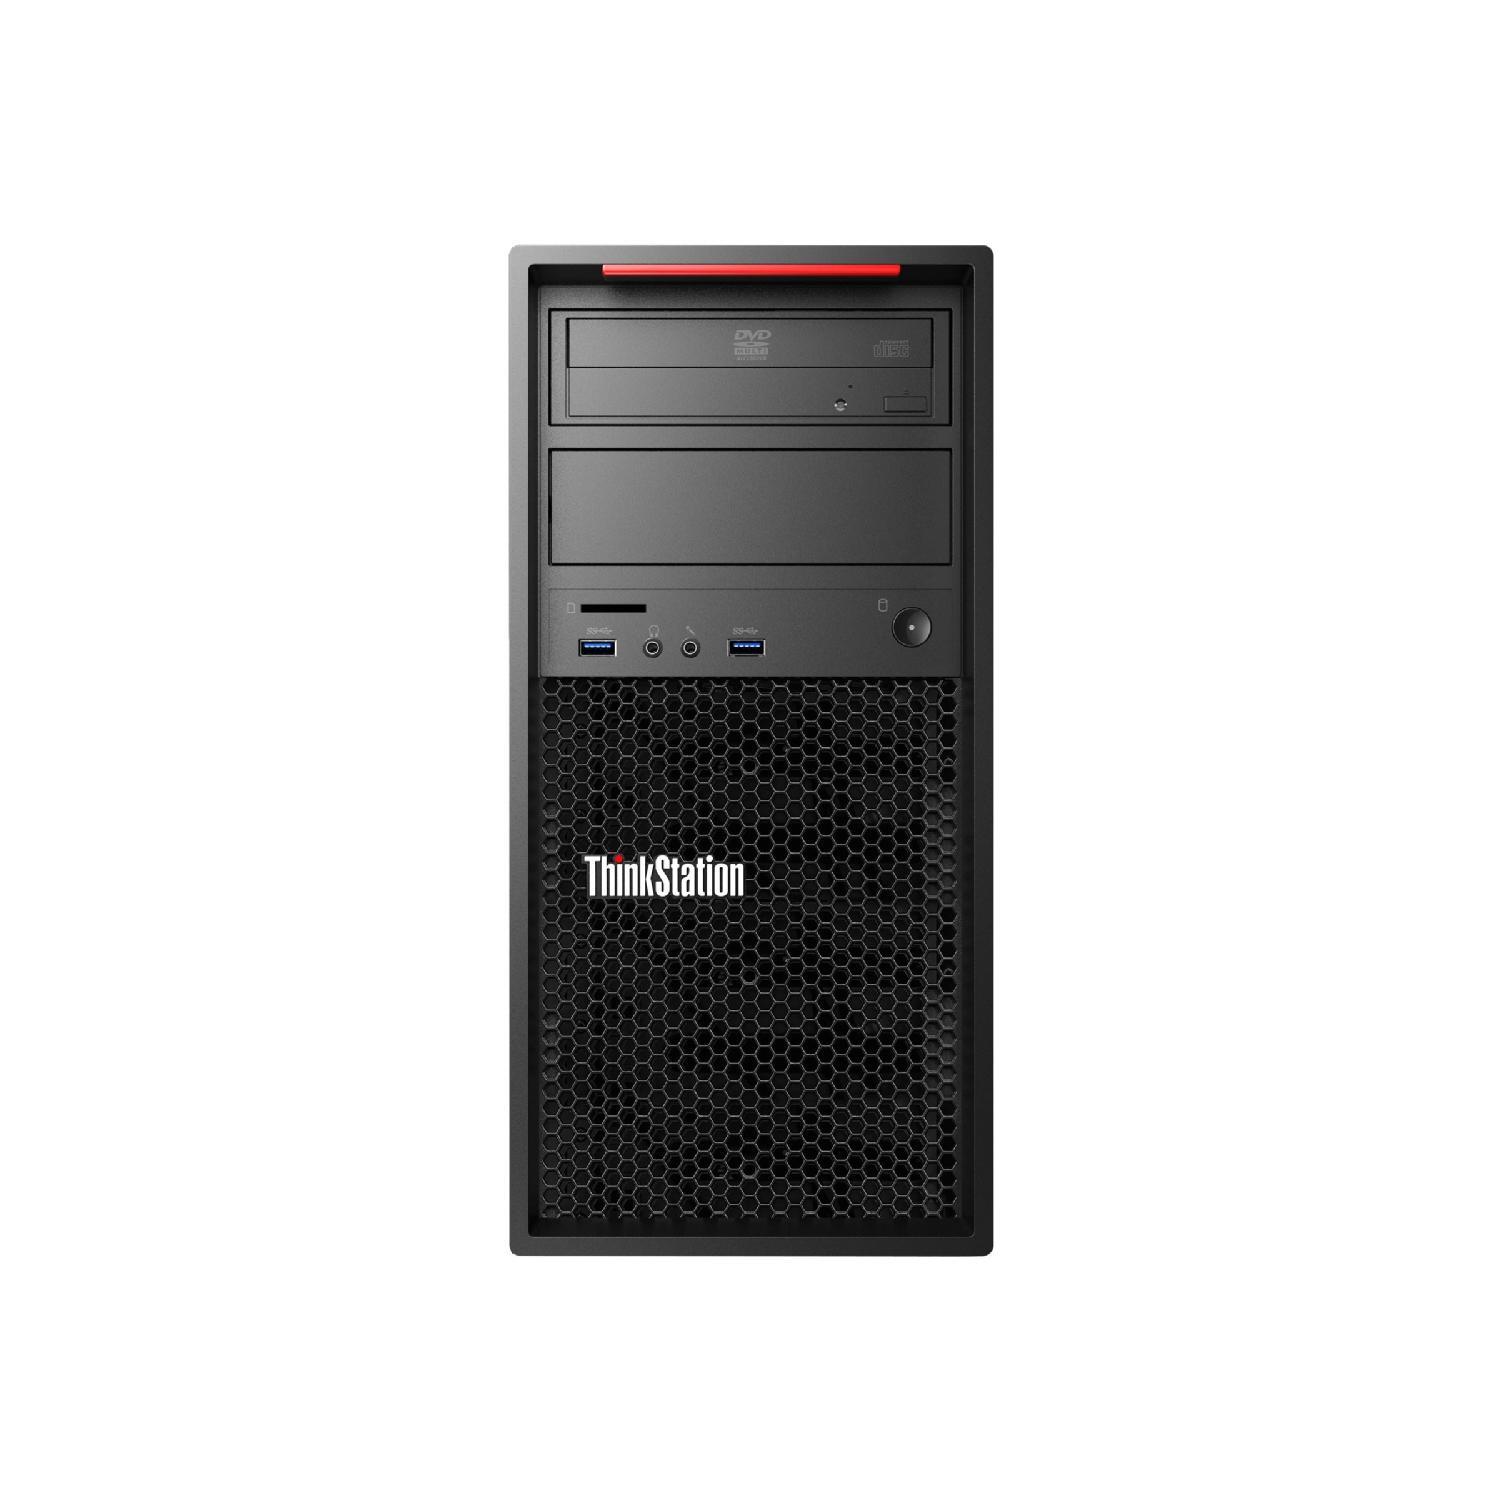 Lenovo ThinkStation P310 Tower i7 6700 3.40GHz 8GB RAM 256GB SSD Win 10 Full Size Image